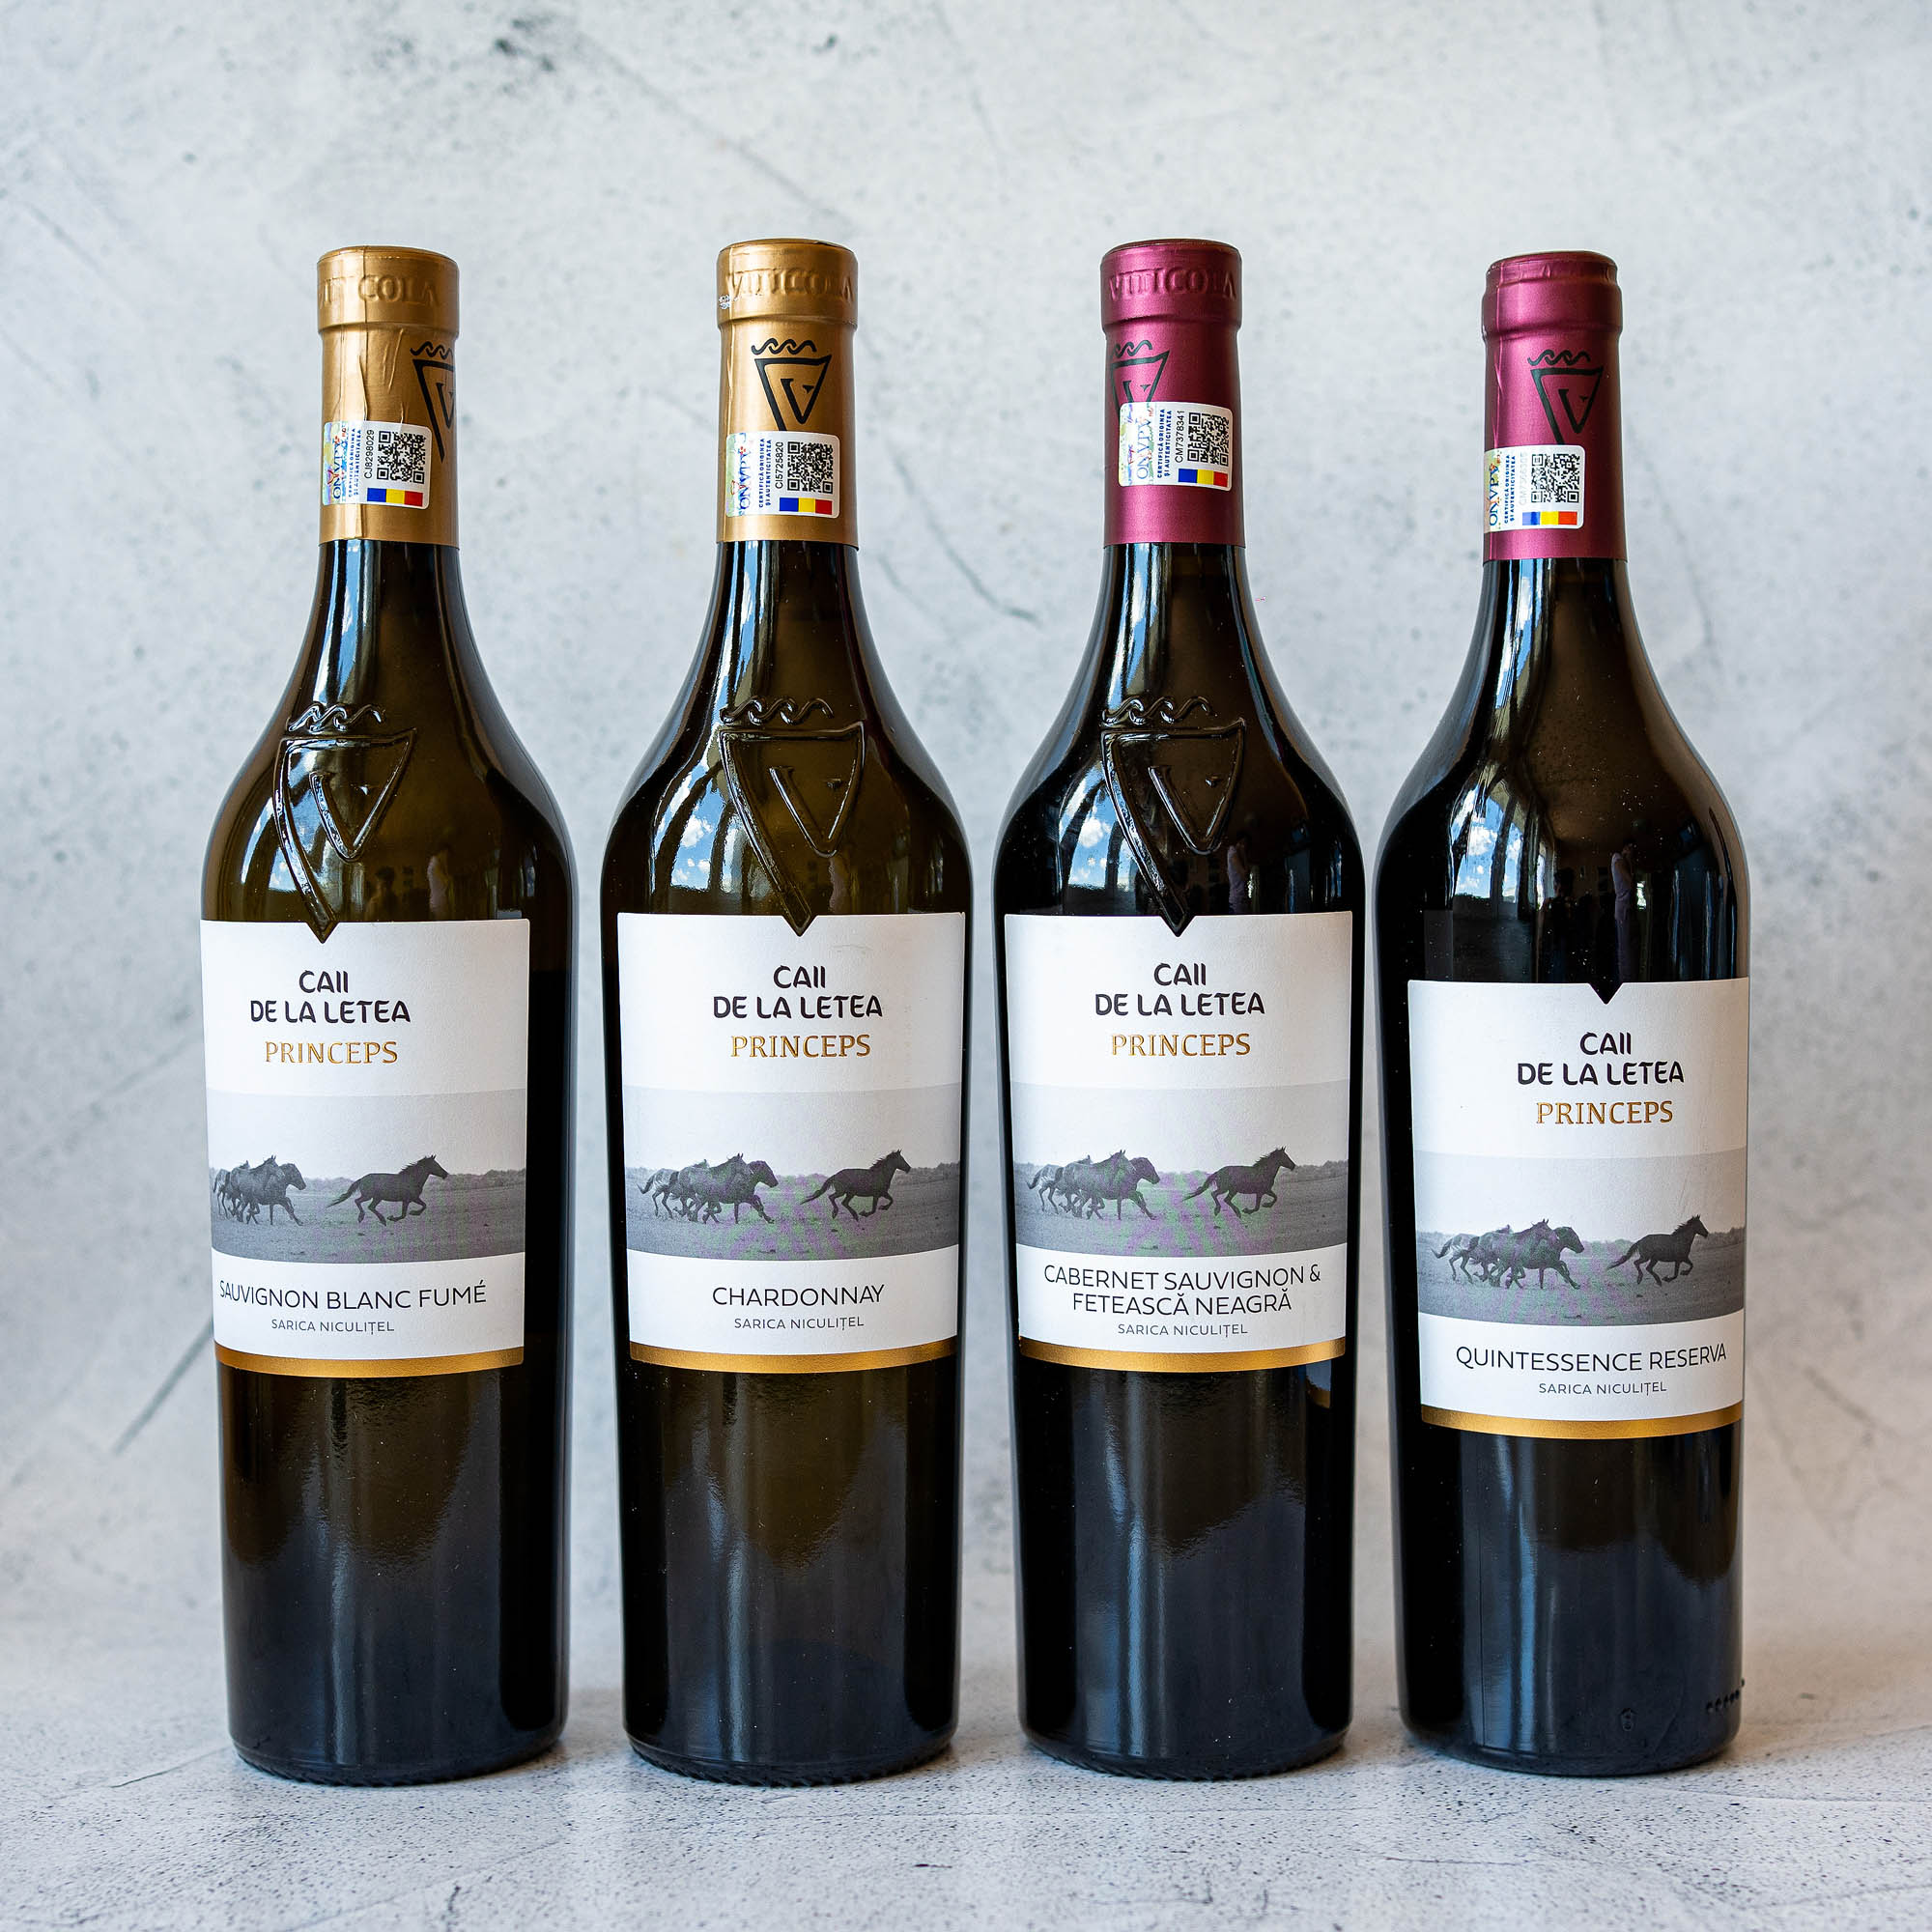 A new range of wines comes from Dobrogea: Caii de la Letea Princeps